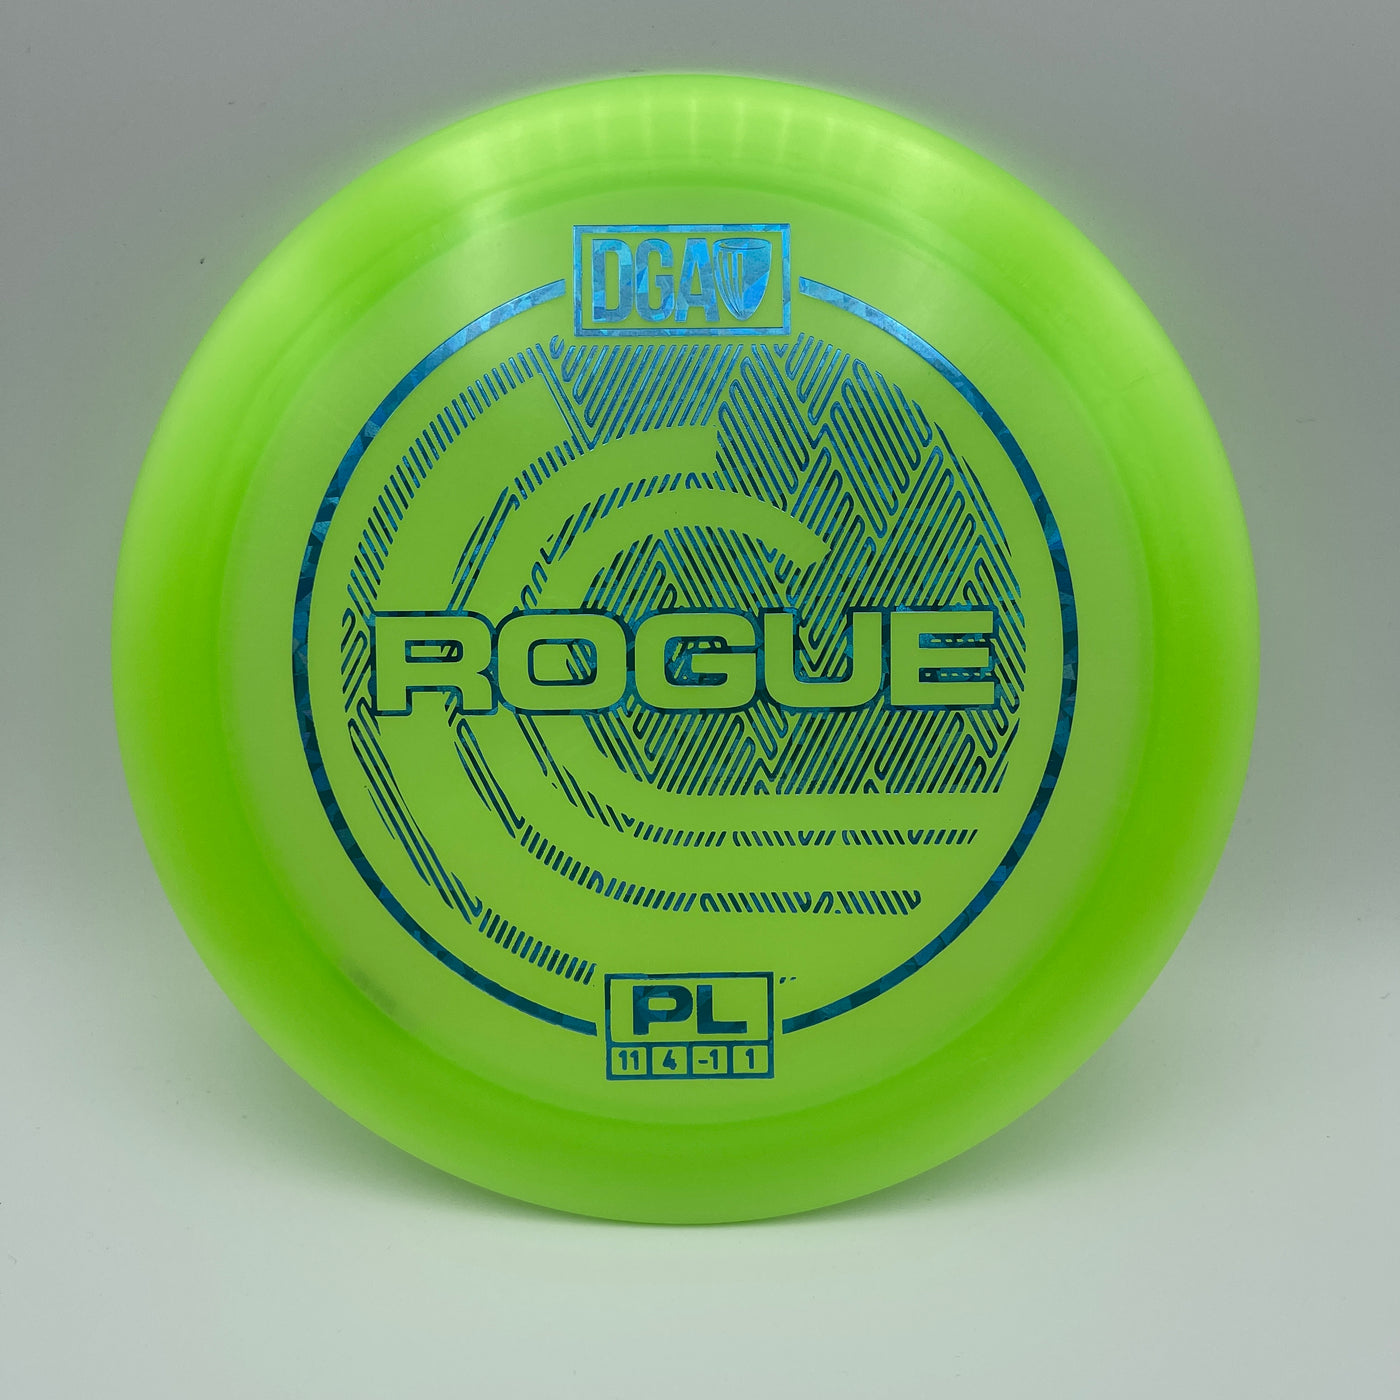 Proline Rogue